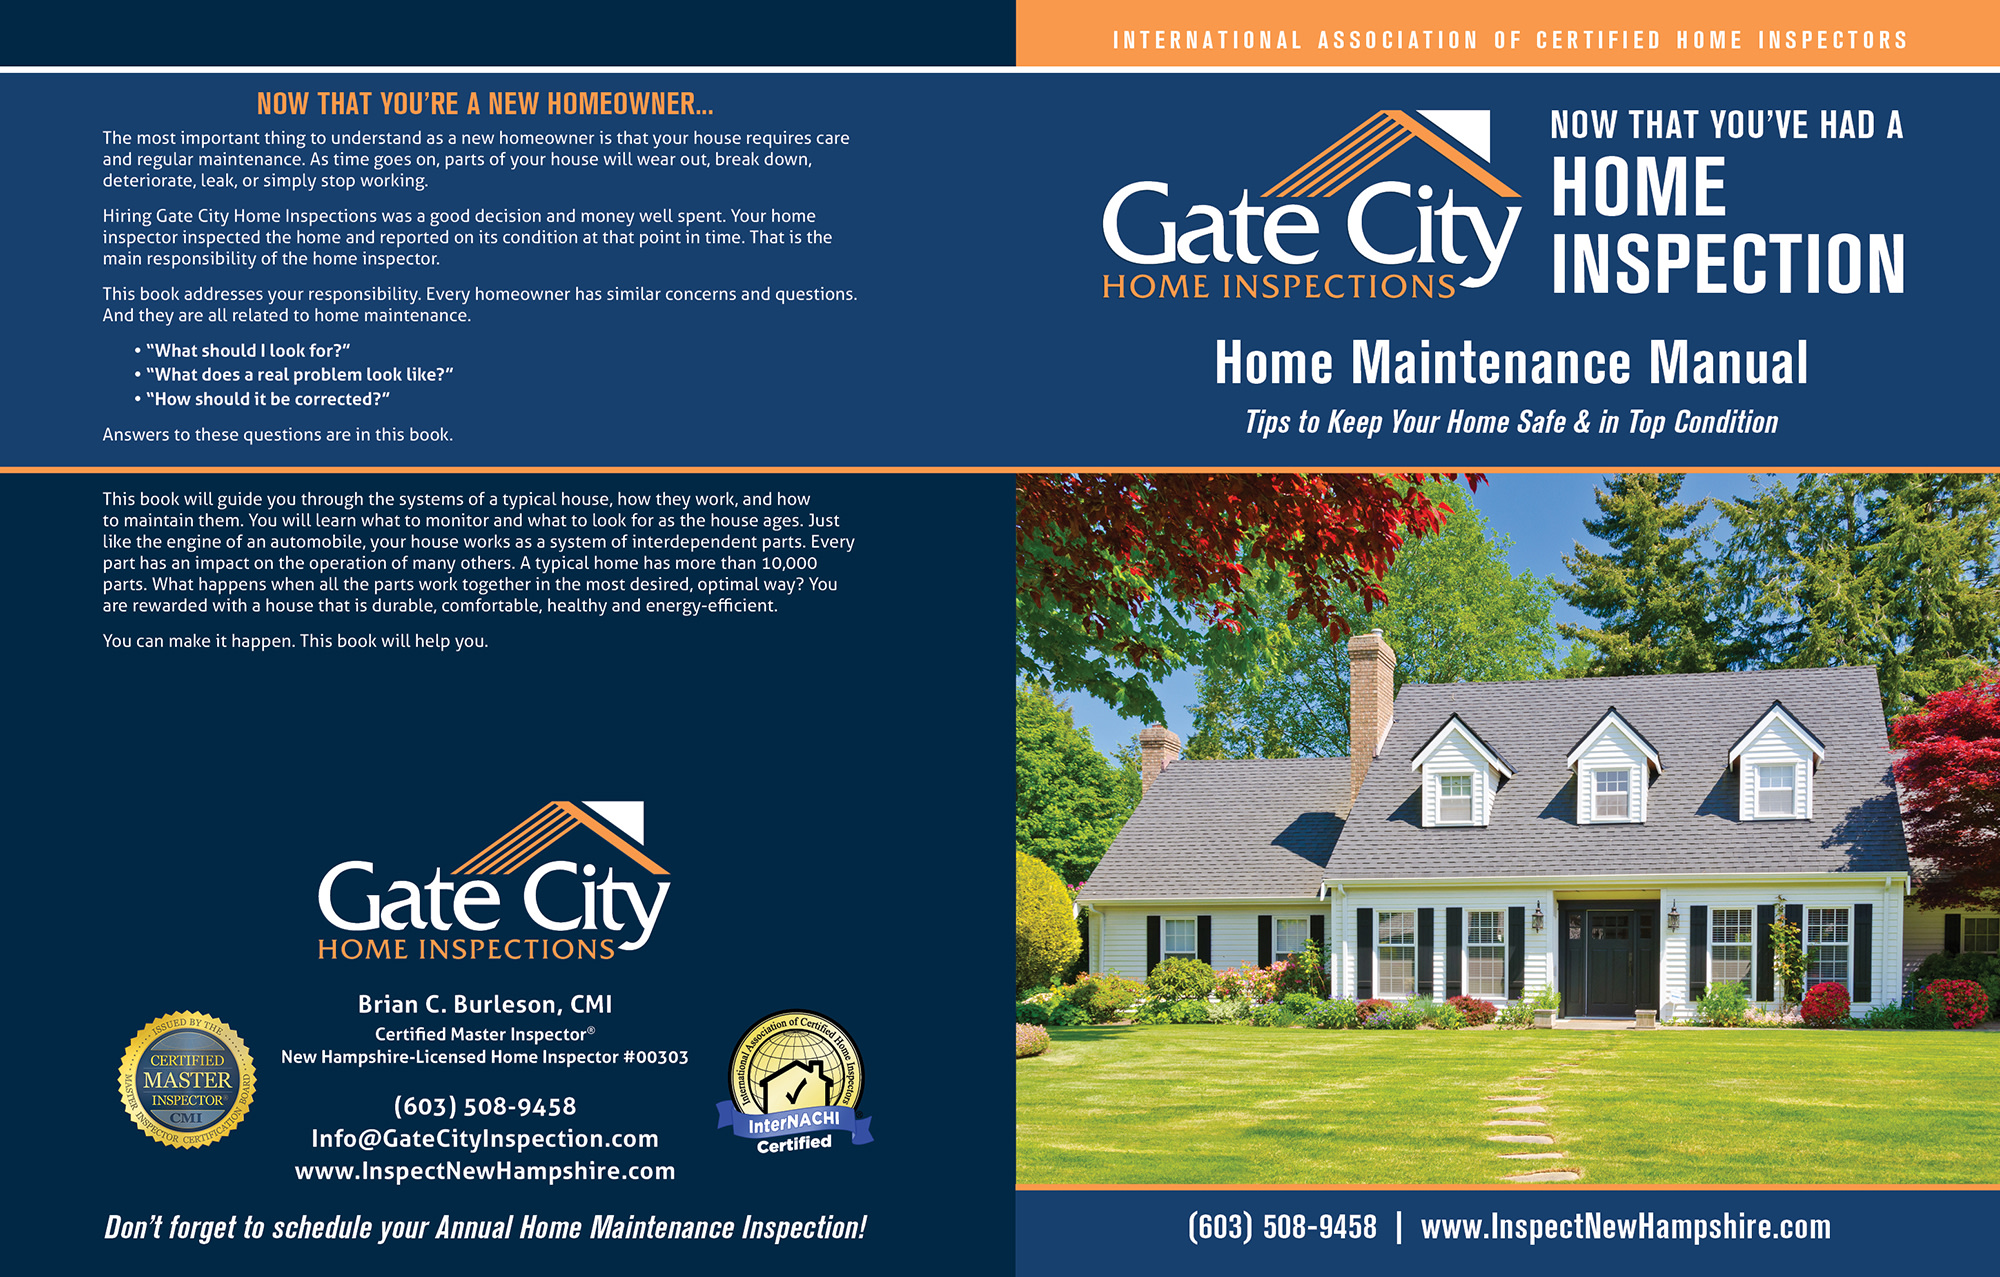 Custom Home Maintenance Book for Gate City Home Inspections.